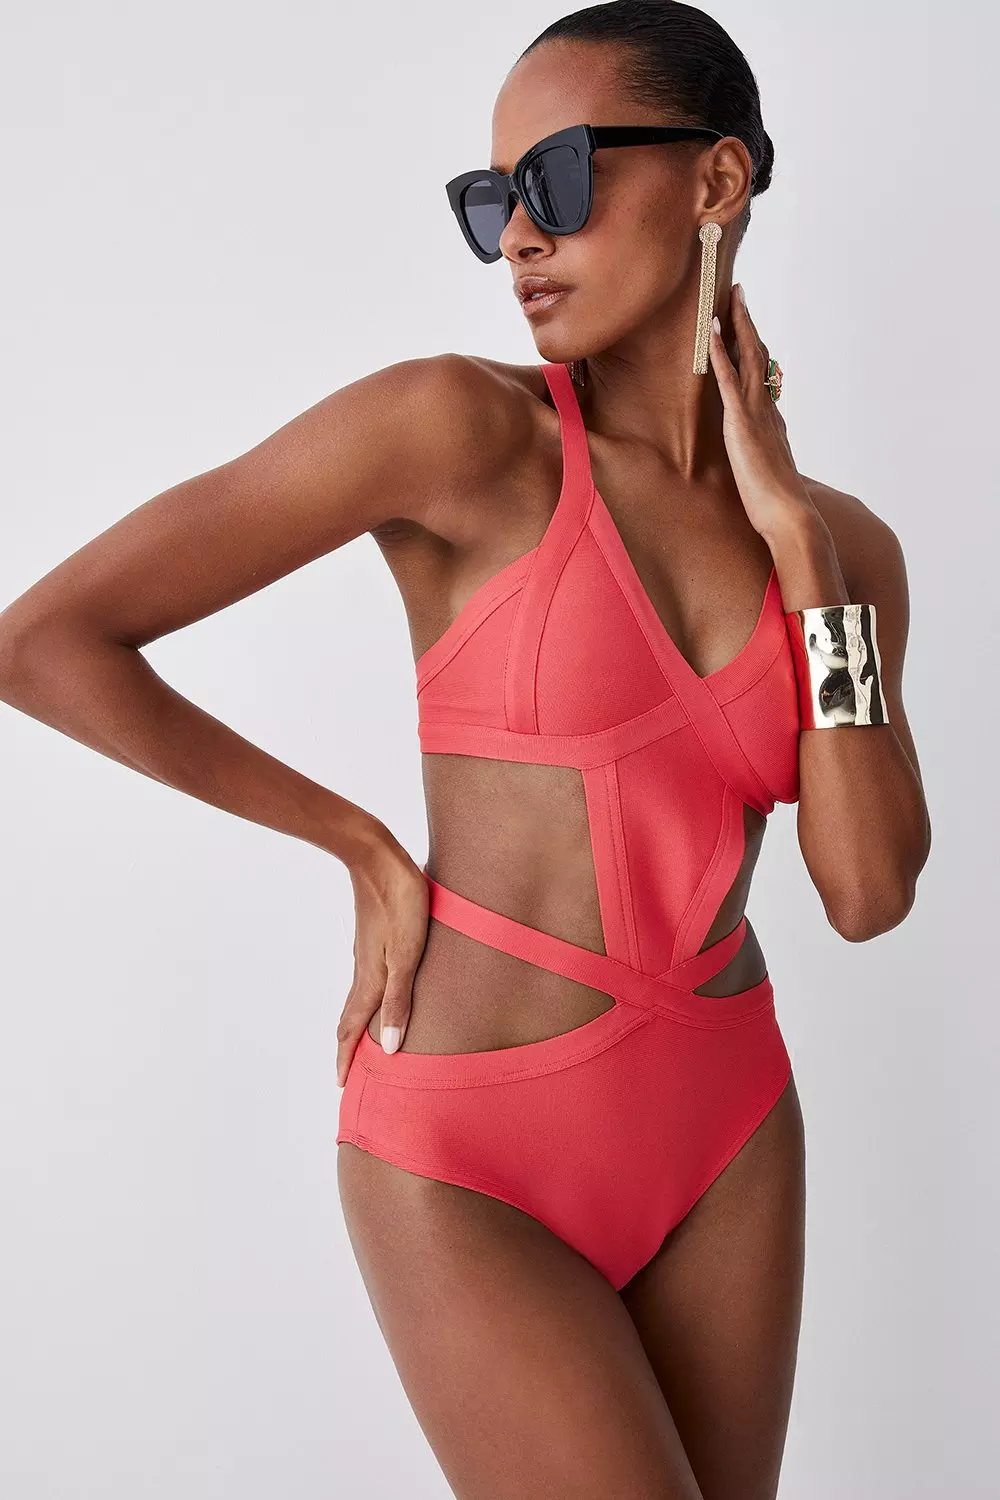 Swimsuits For All Women's Plus Size Wrap Front Bikini Top 20 Ocean Miami 